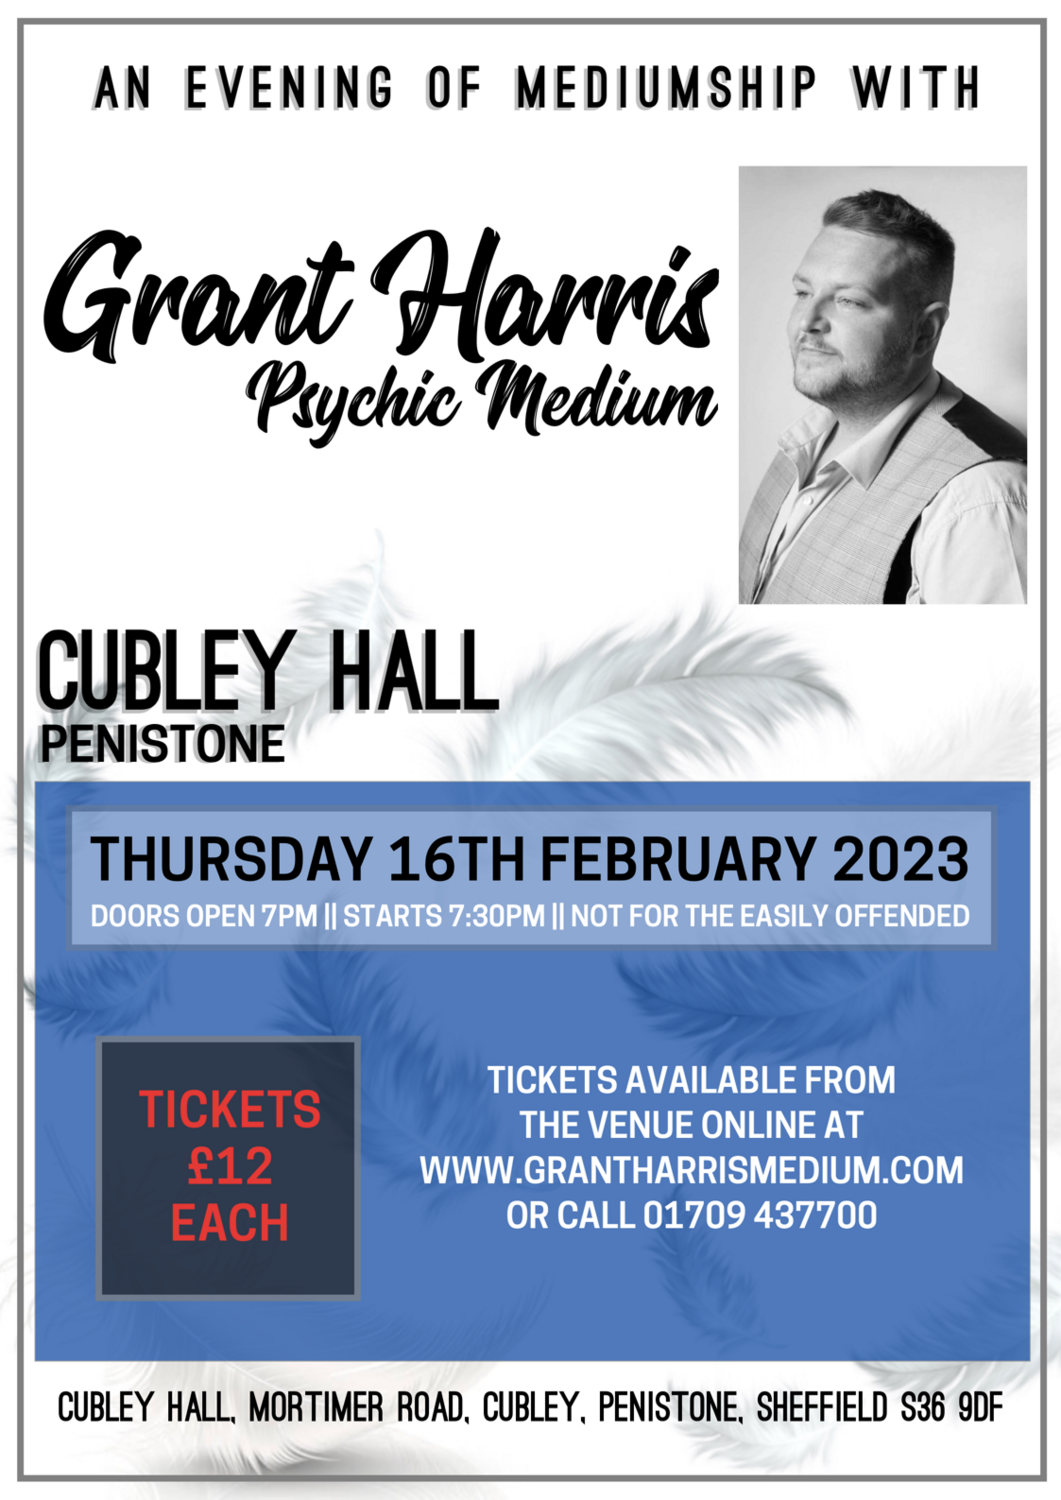 Cubley Hall, Penistone, Sheffield, Thursday 16th February 2023